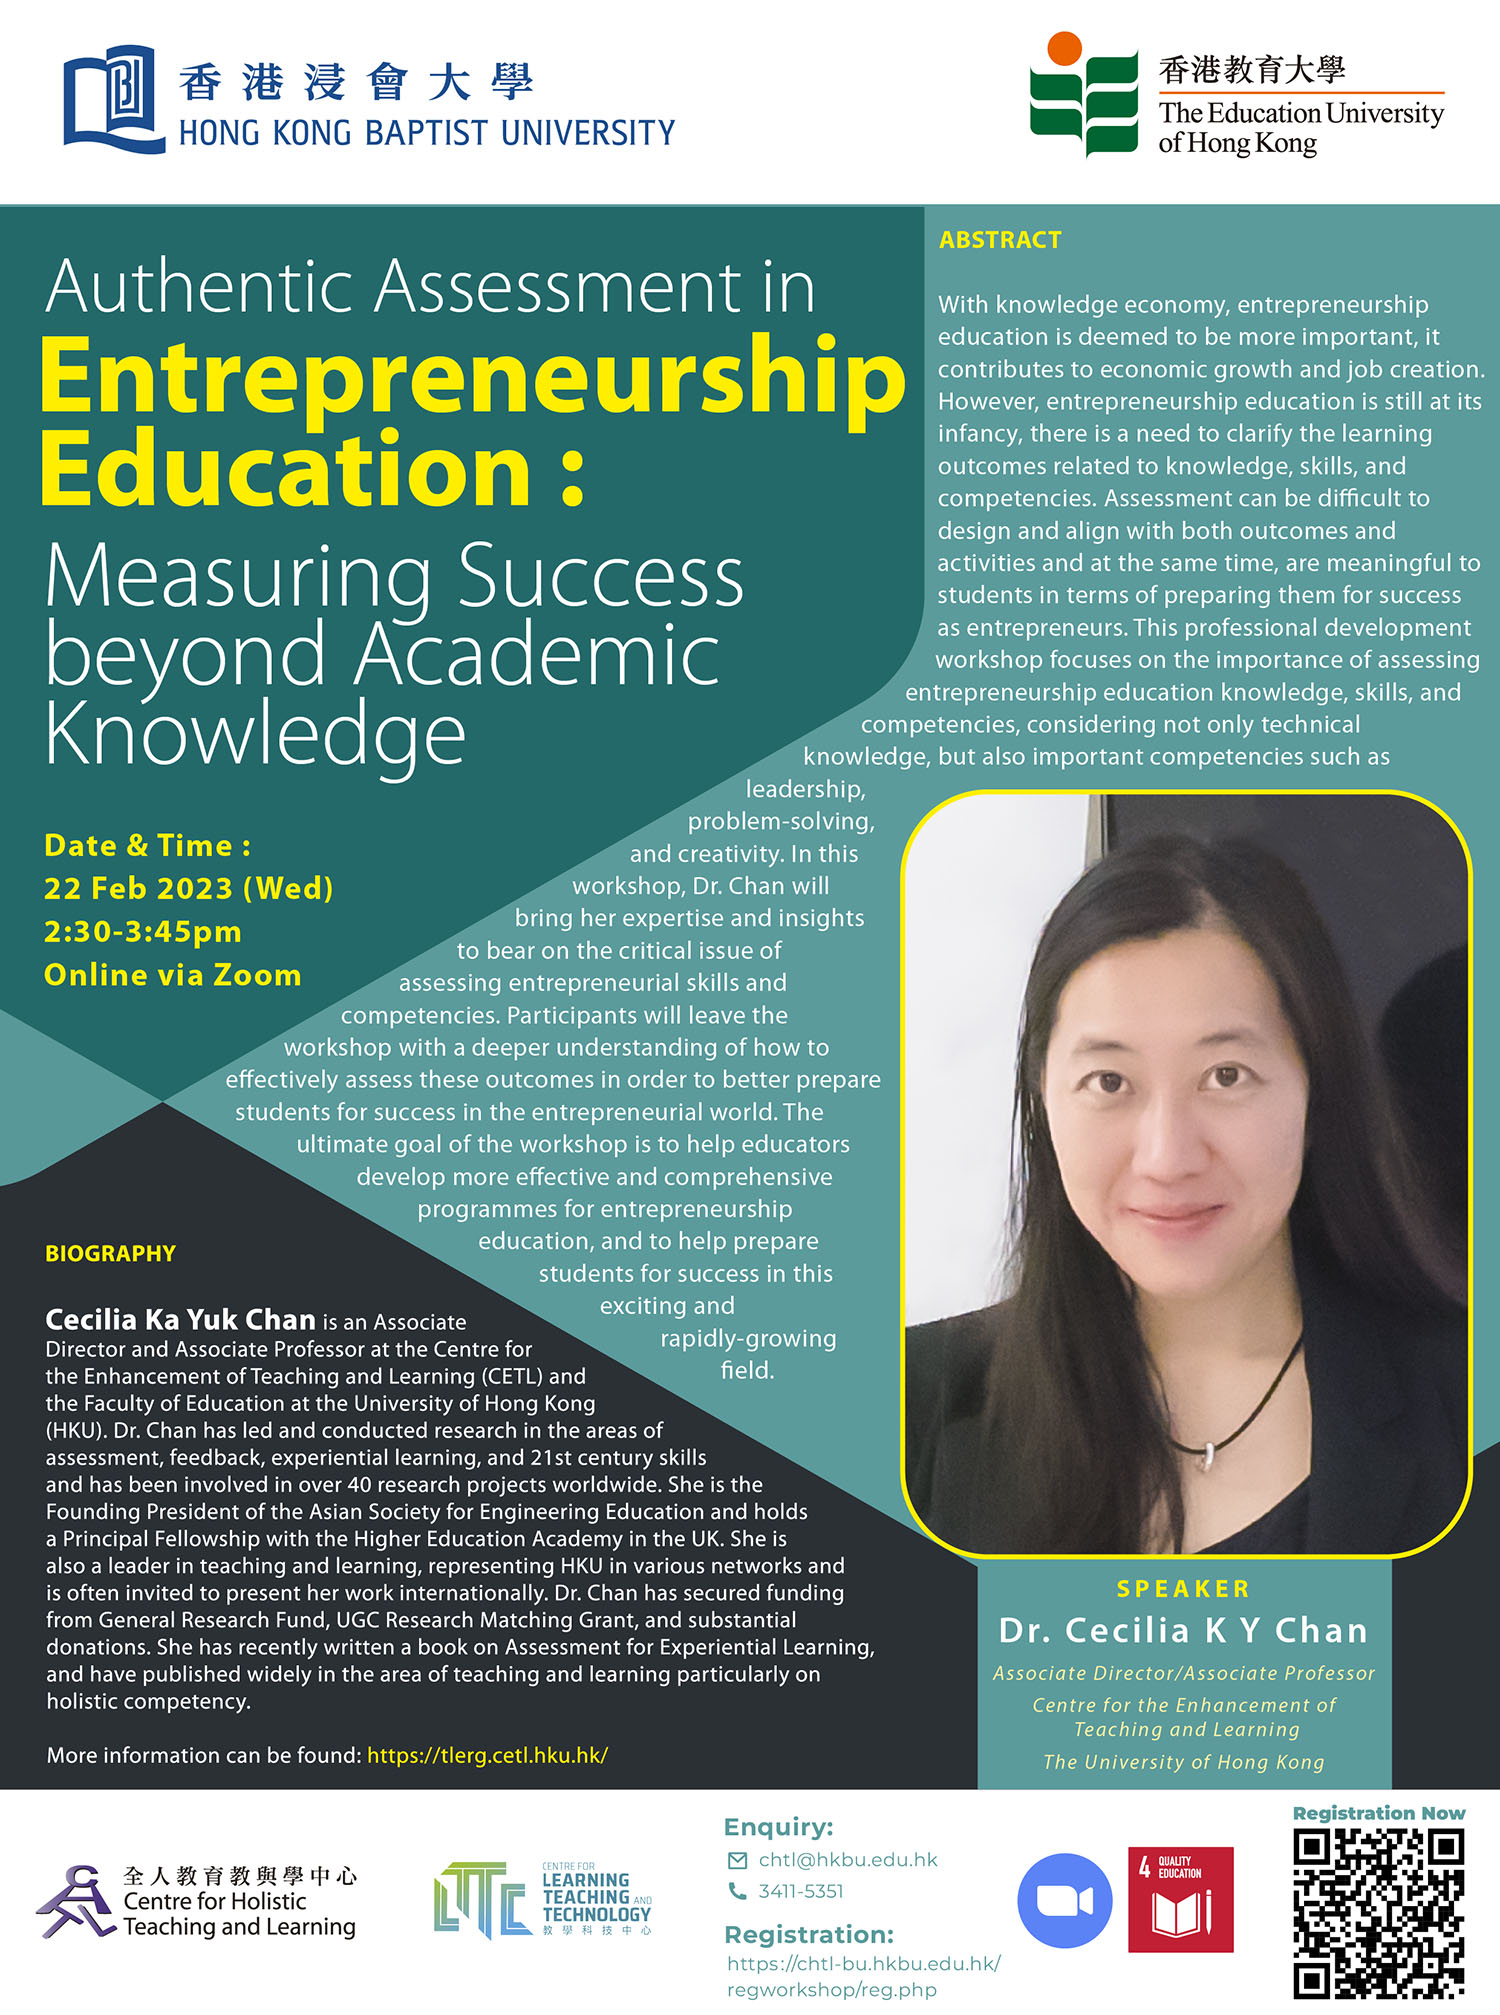 Authentic Assessment in Entrepreneurship Education: Measuring Success beyond Academic Knowledge